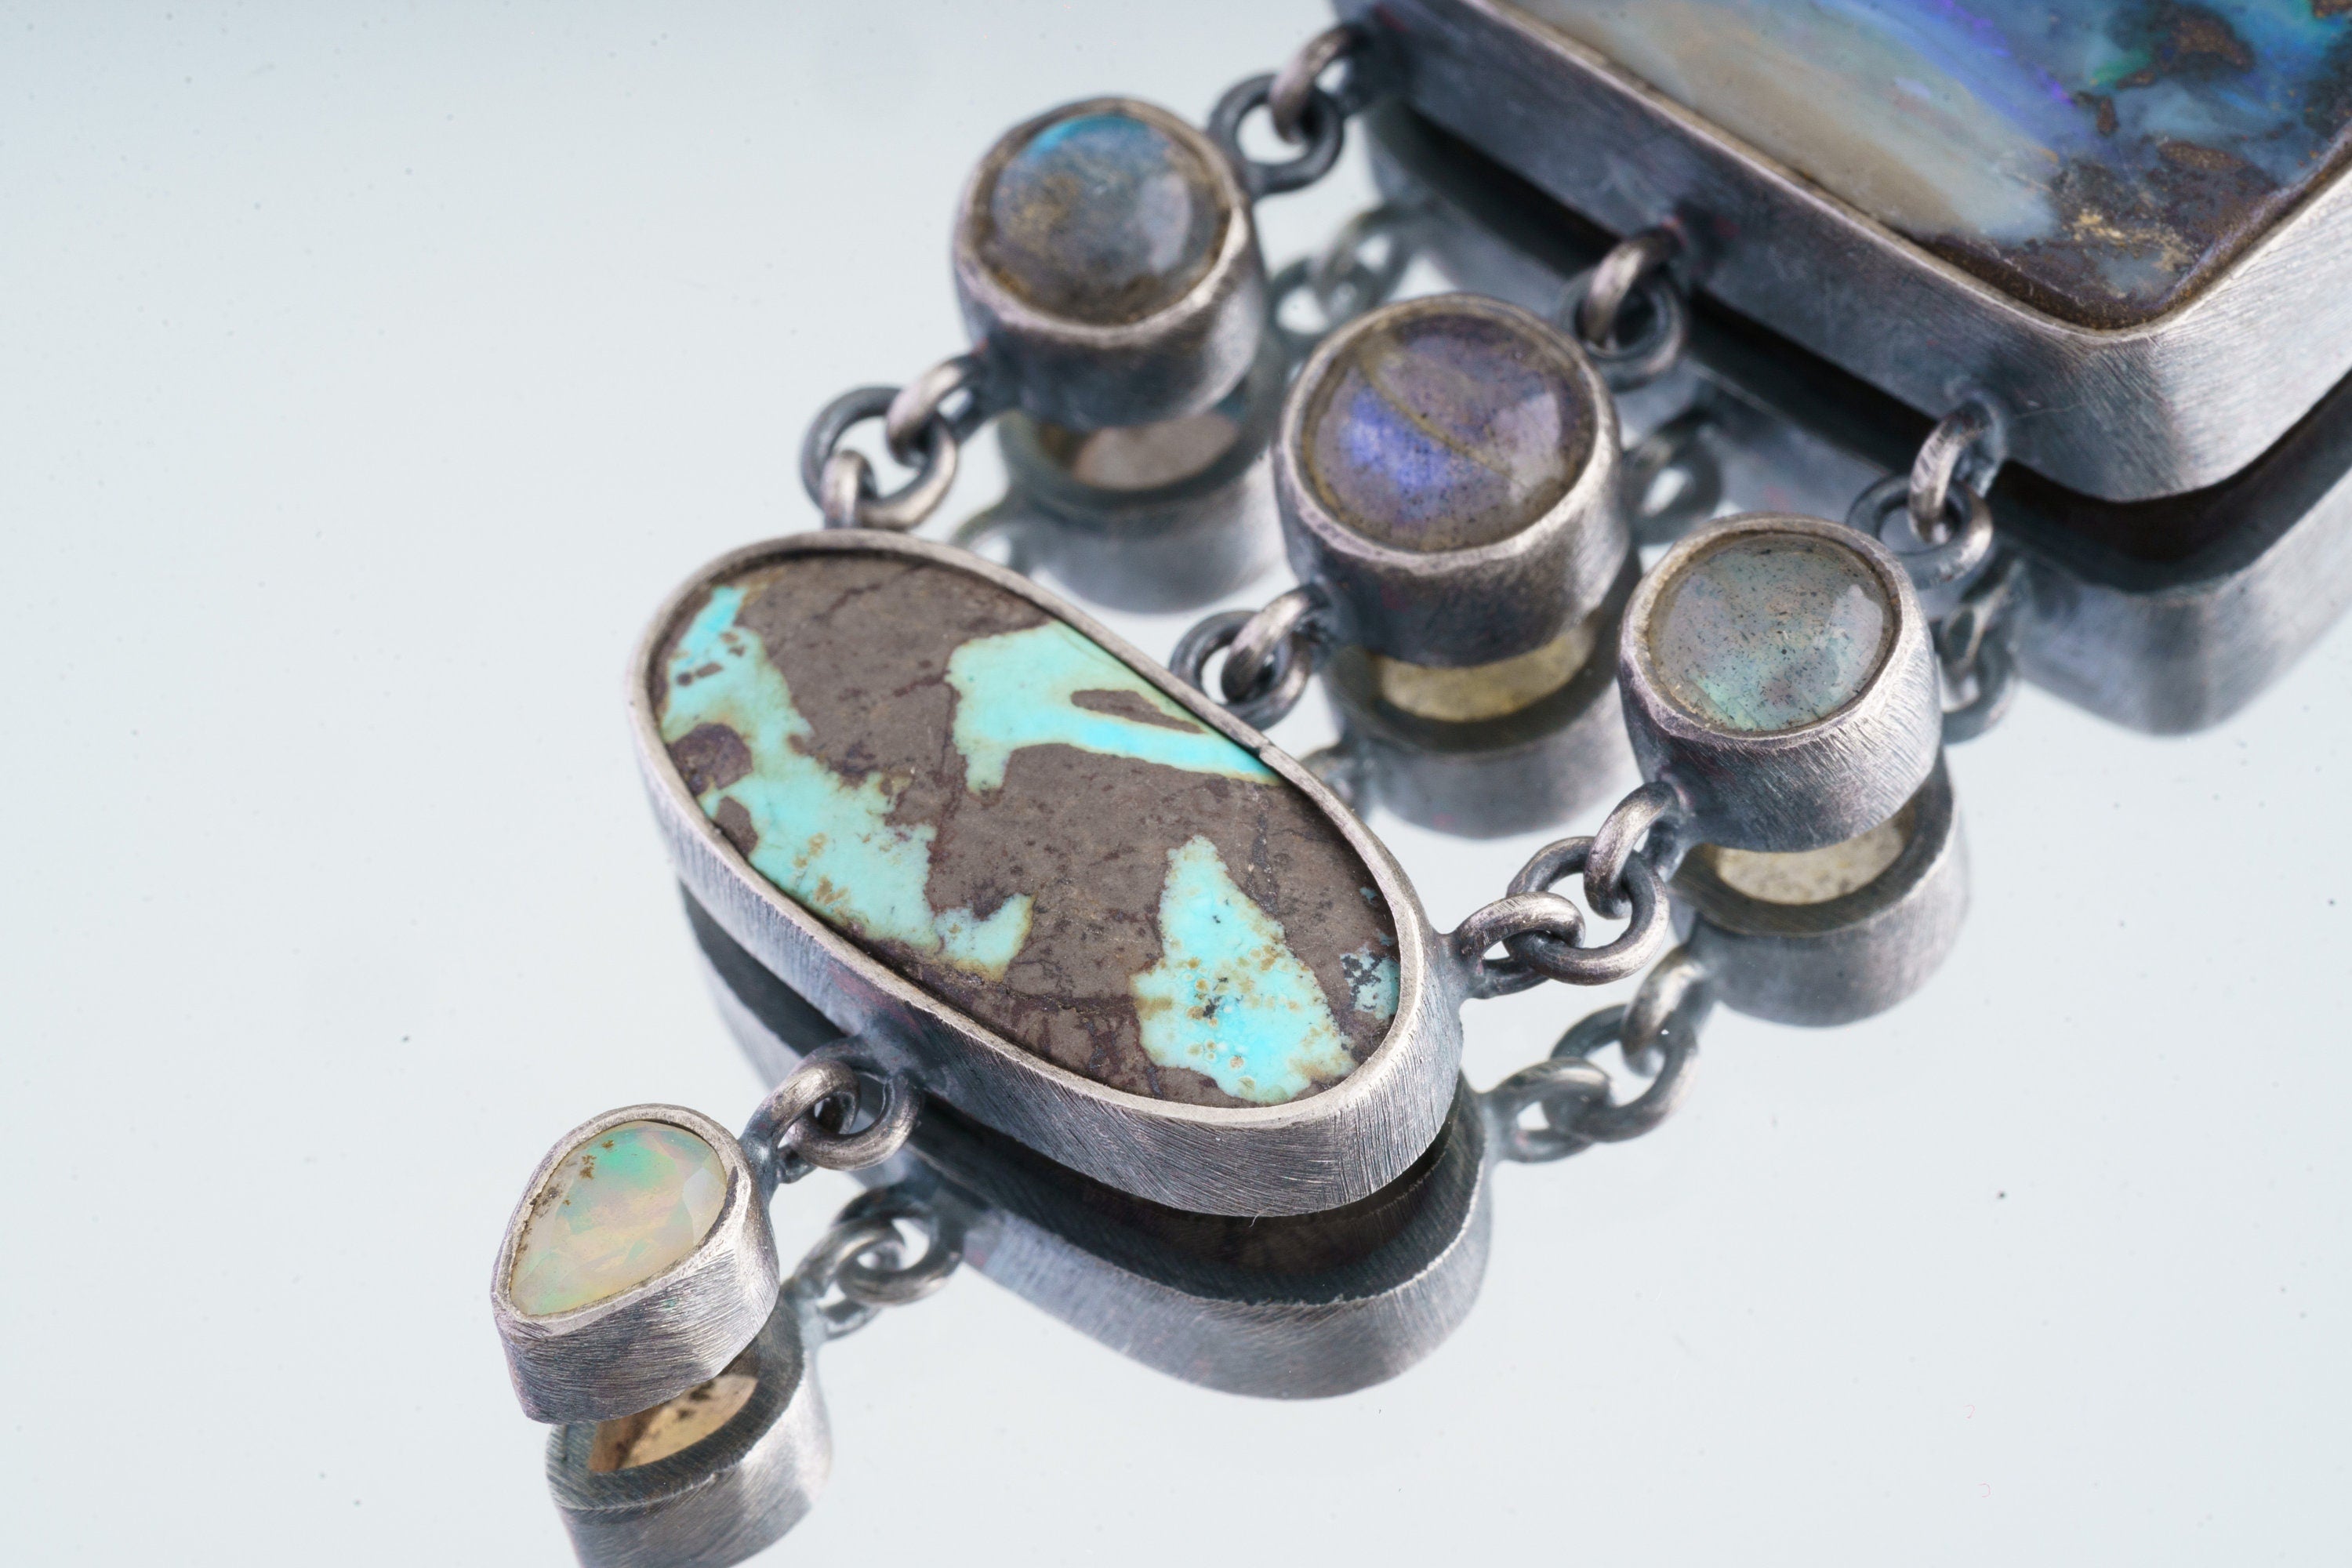 Ocean's Symphony - Australian Opal, Labradorite, Royston Turquoise, Ethiopian Opal & Moonstone in Textured Oxidized Sterling Silver Pendant